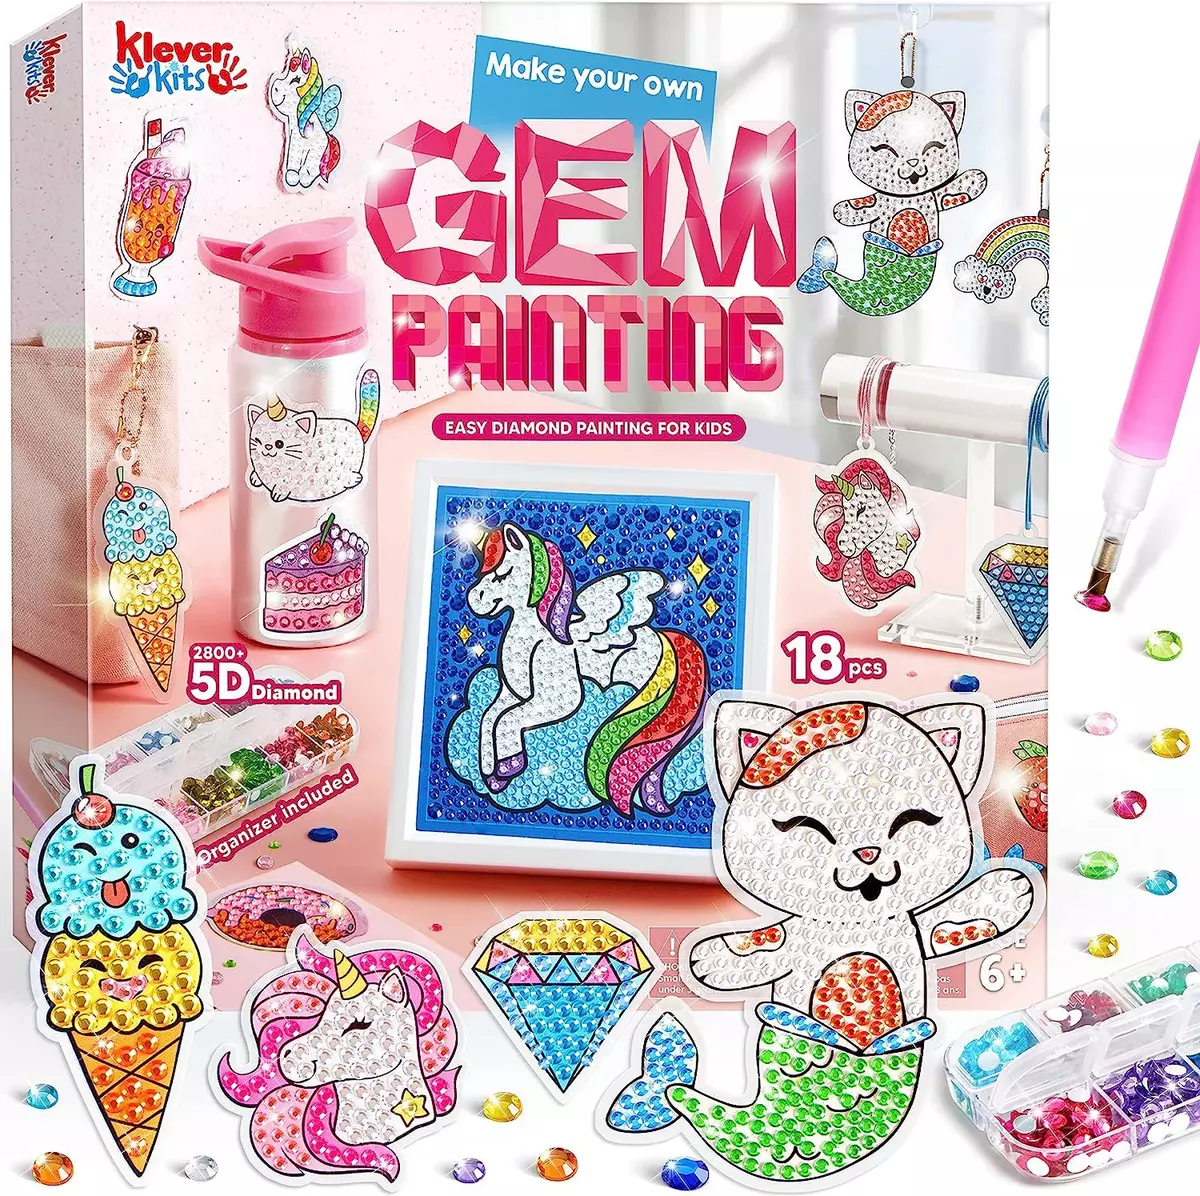 Diamond Gem Art Stickers Kit for Kids, Suncatchers Fun Arts and